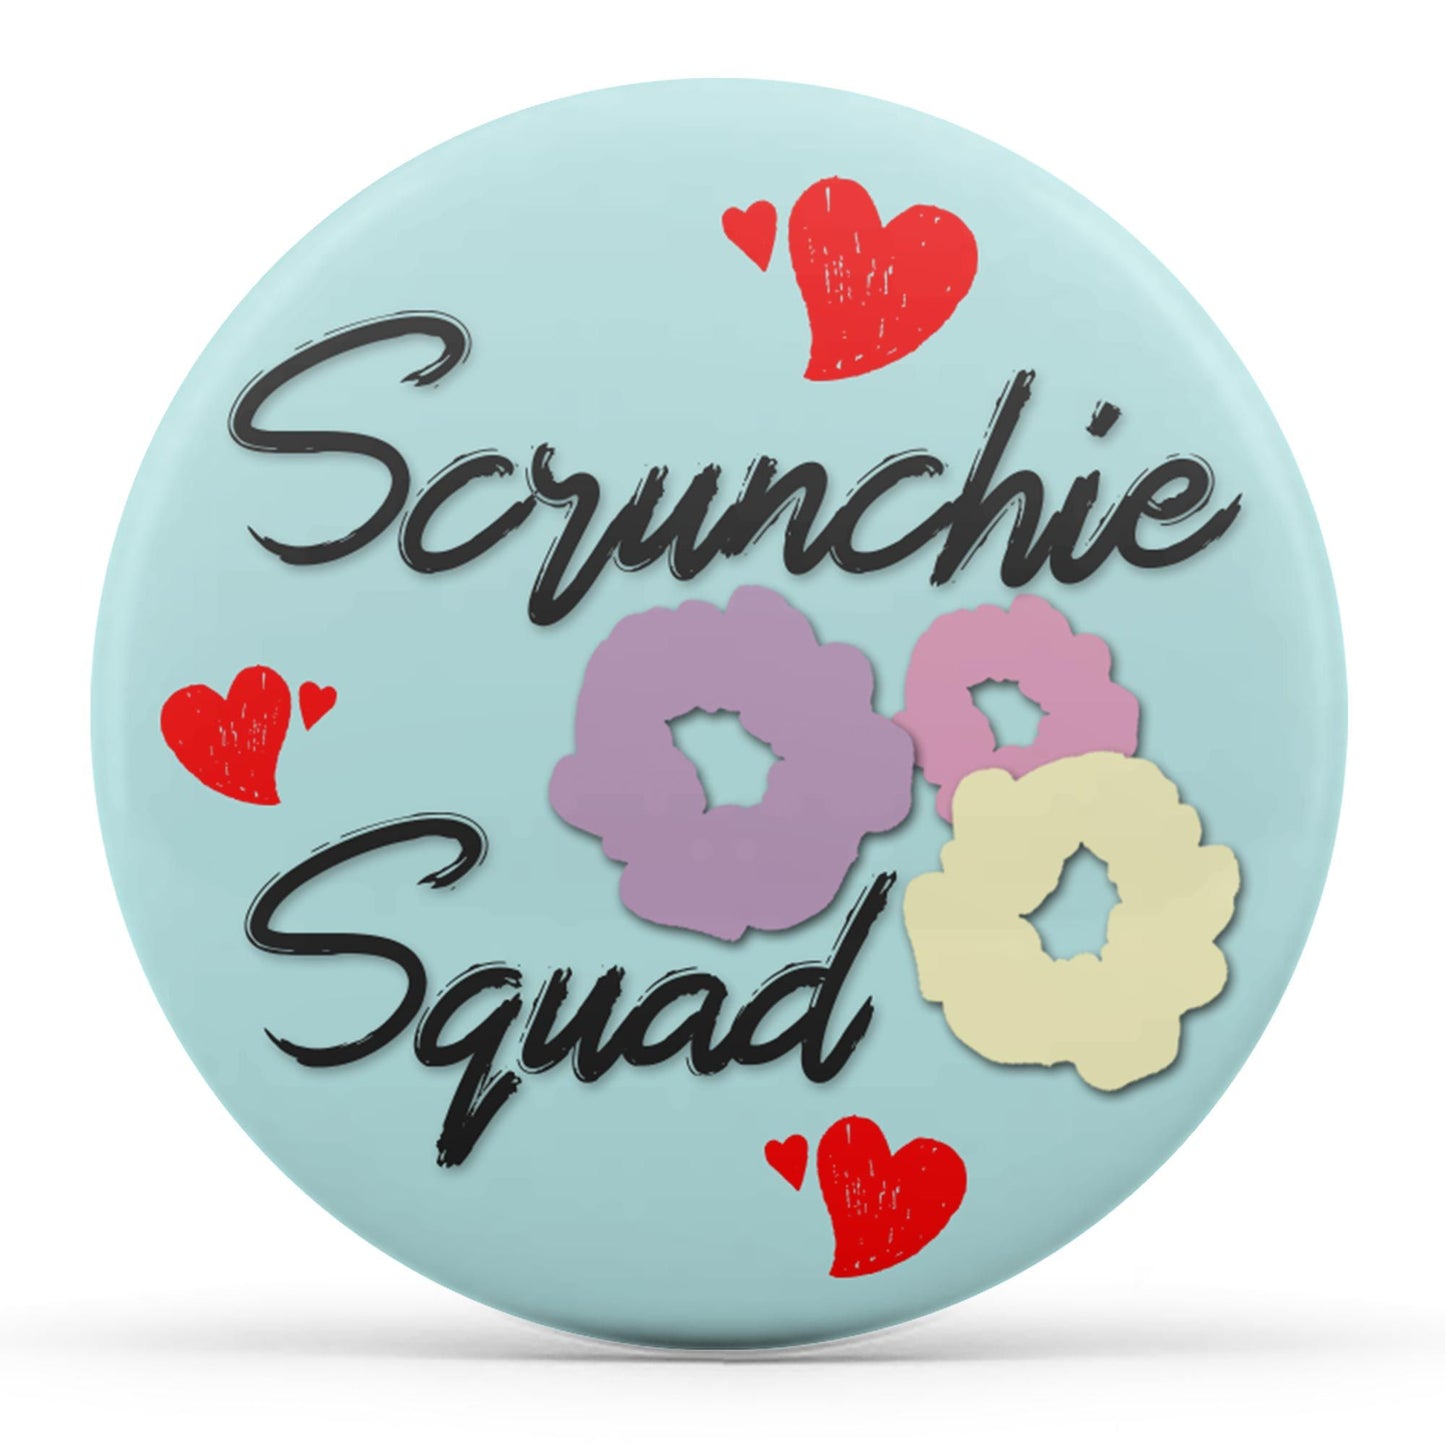 Scrunchie Squad Image